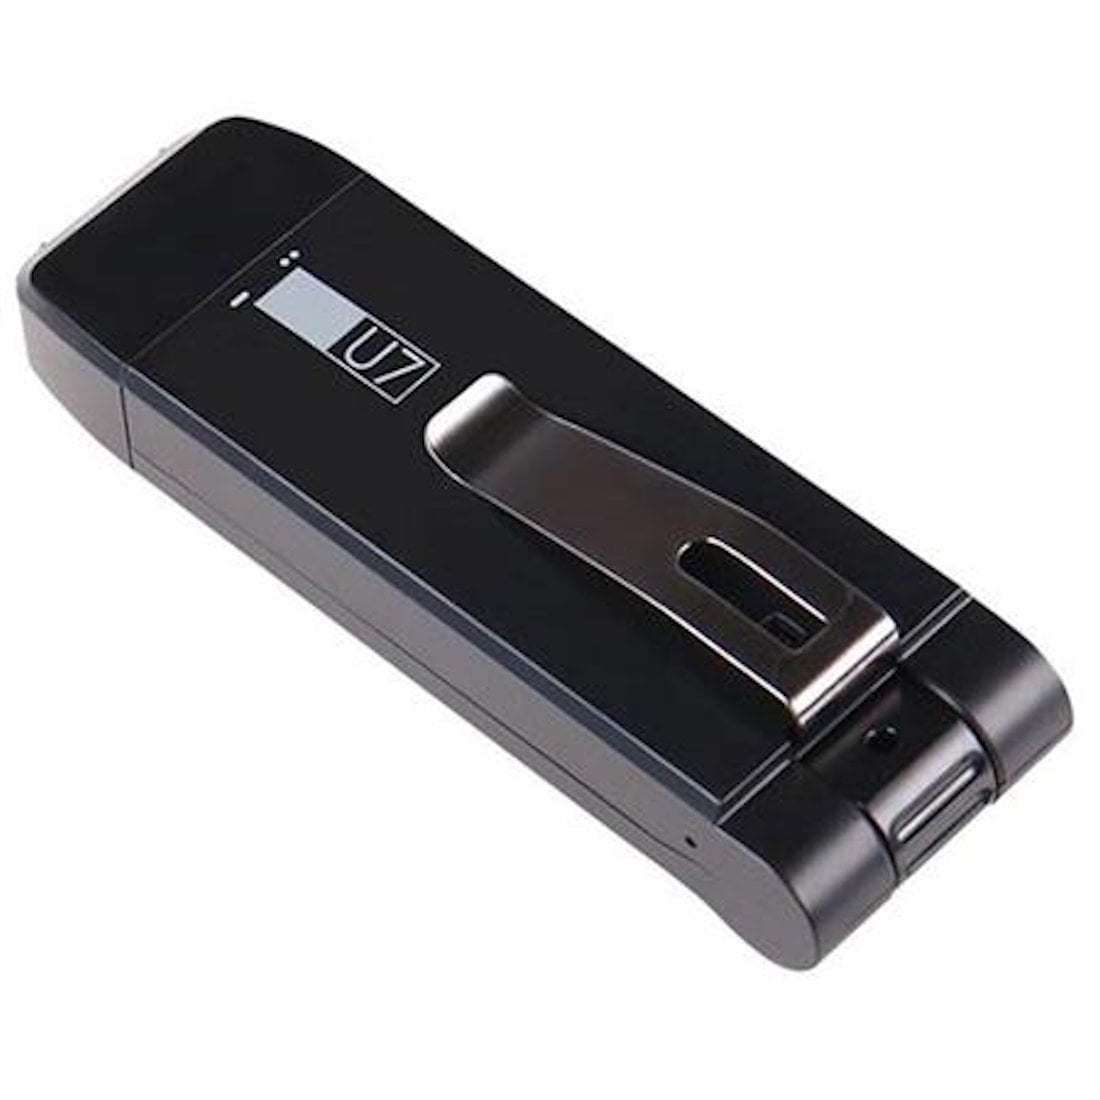 DVR707 USB Stick style HD DVR with Hidden Camera KJB Products